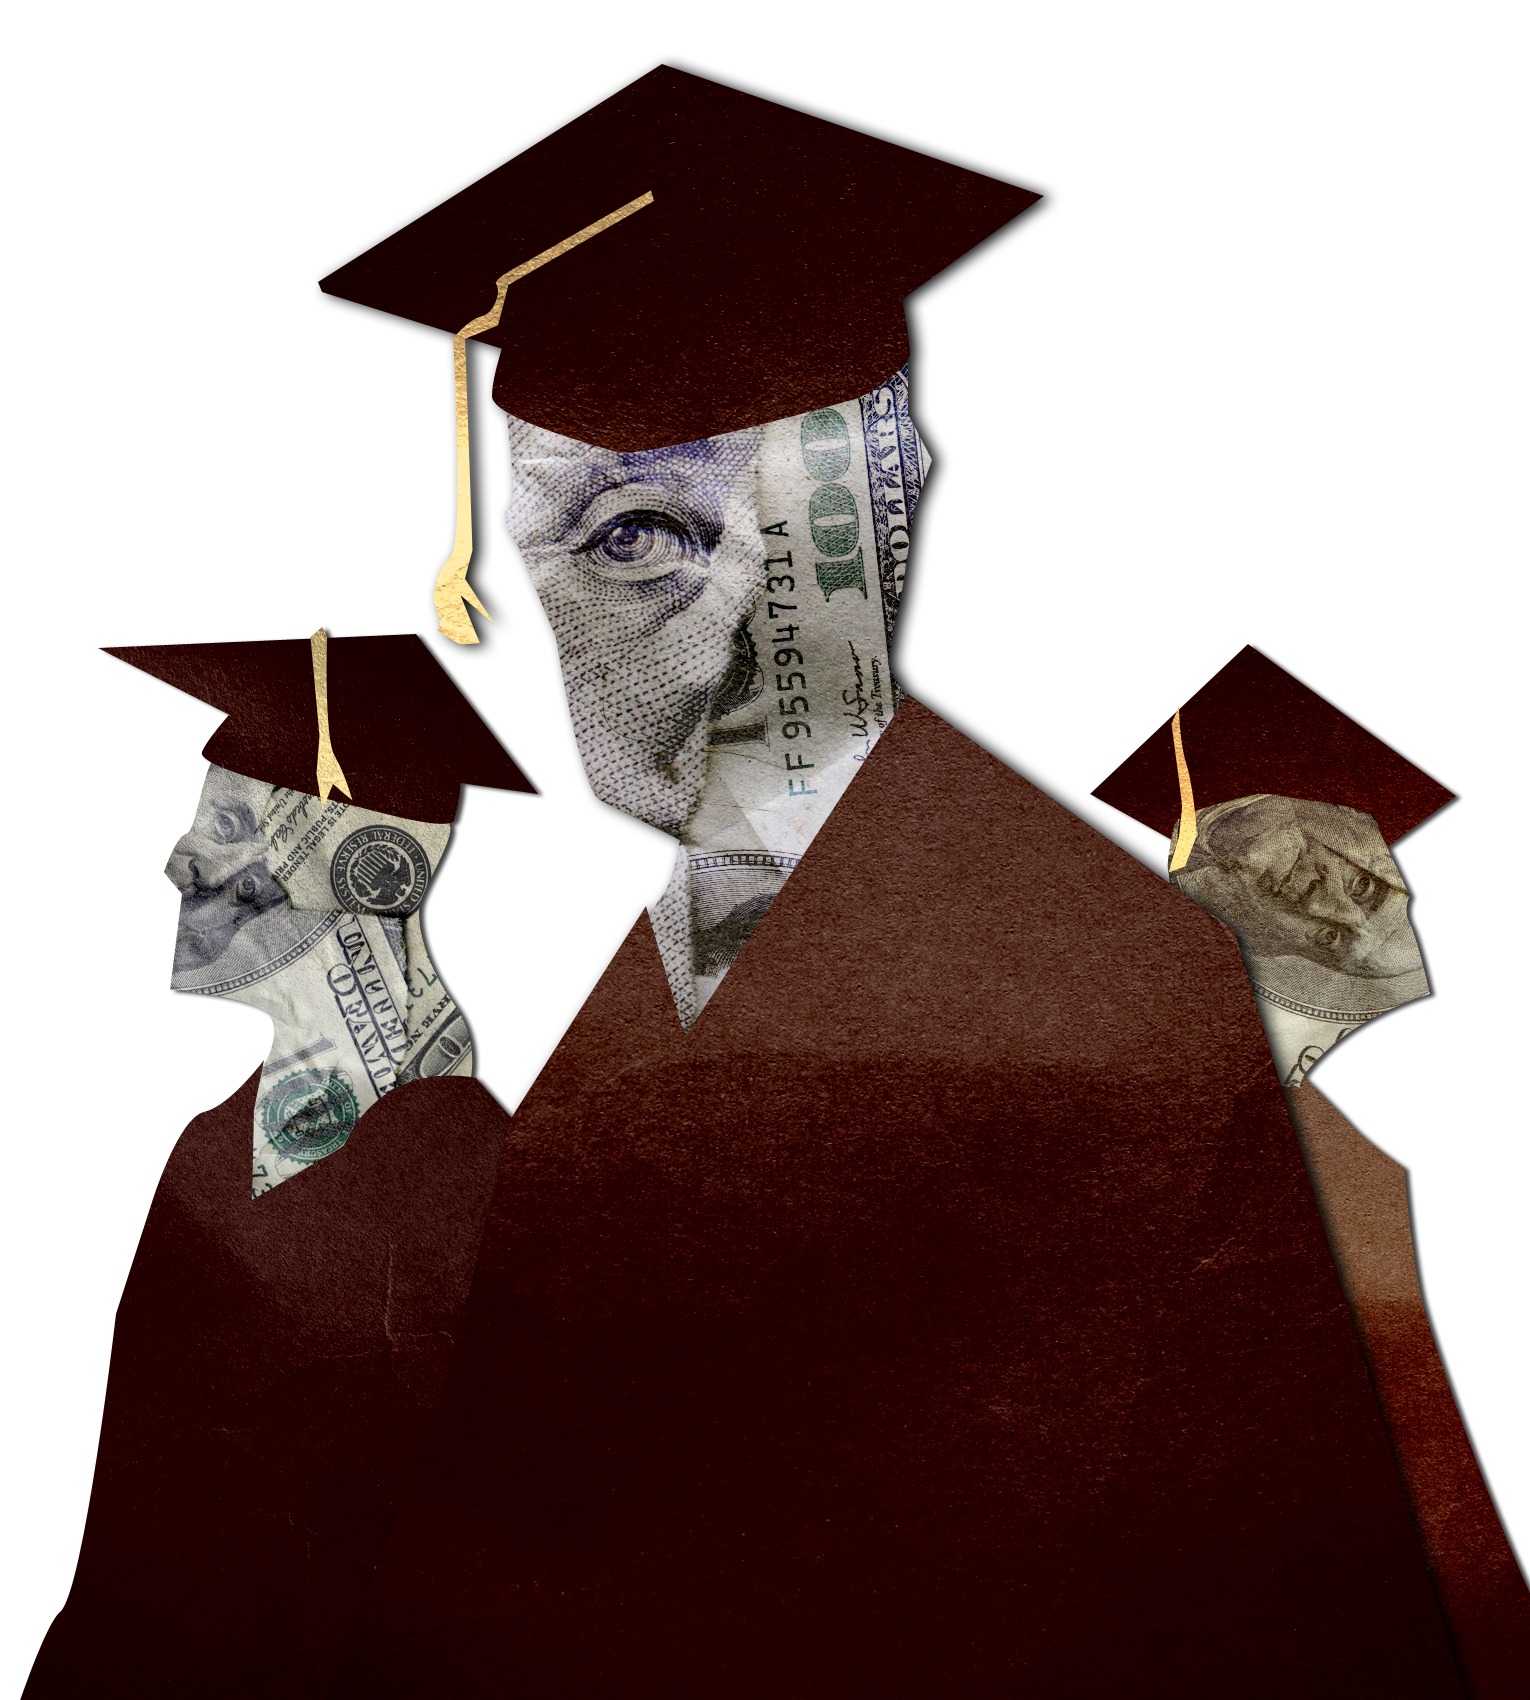 An illustration of student debt,